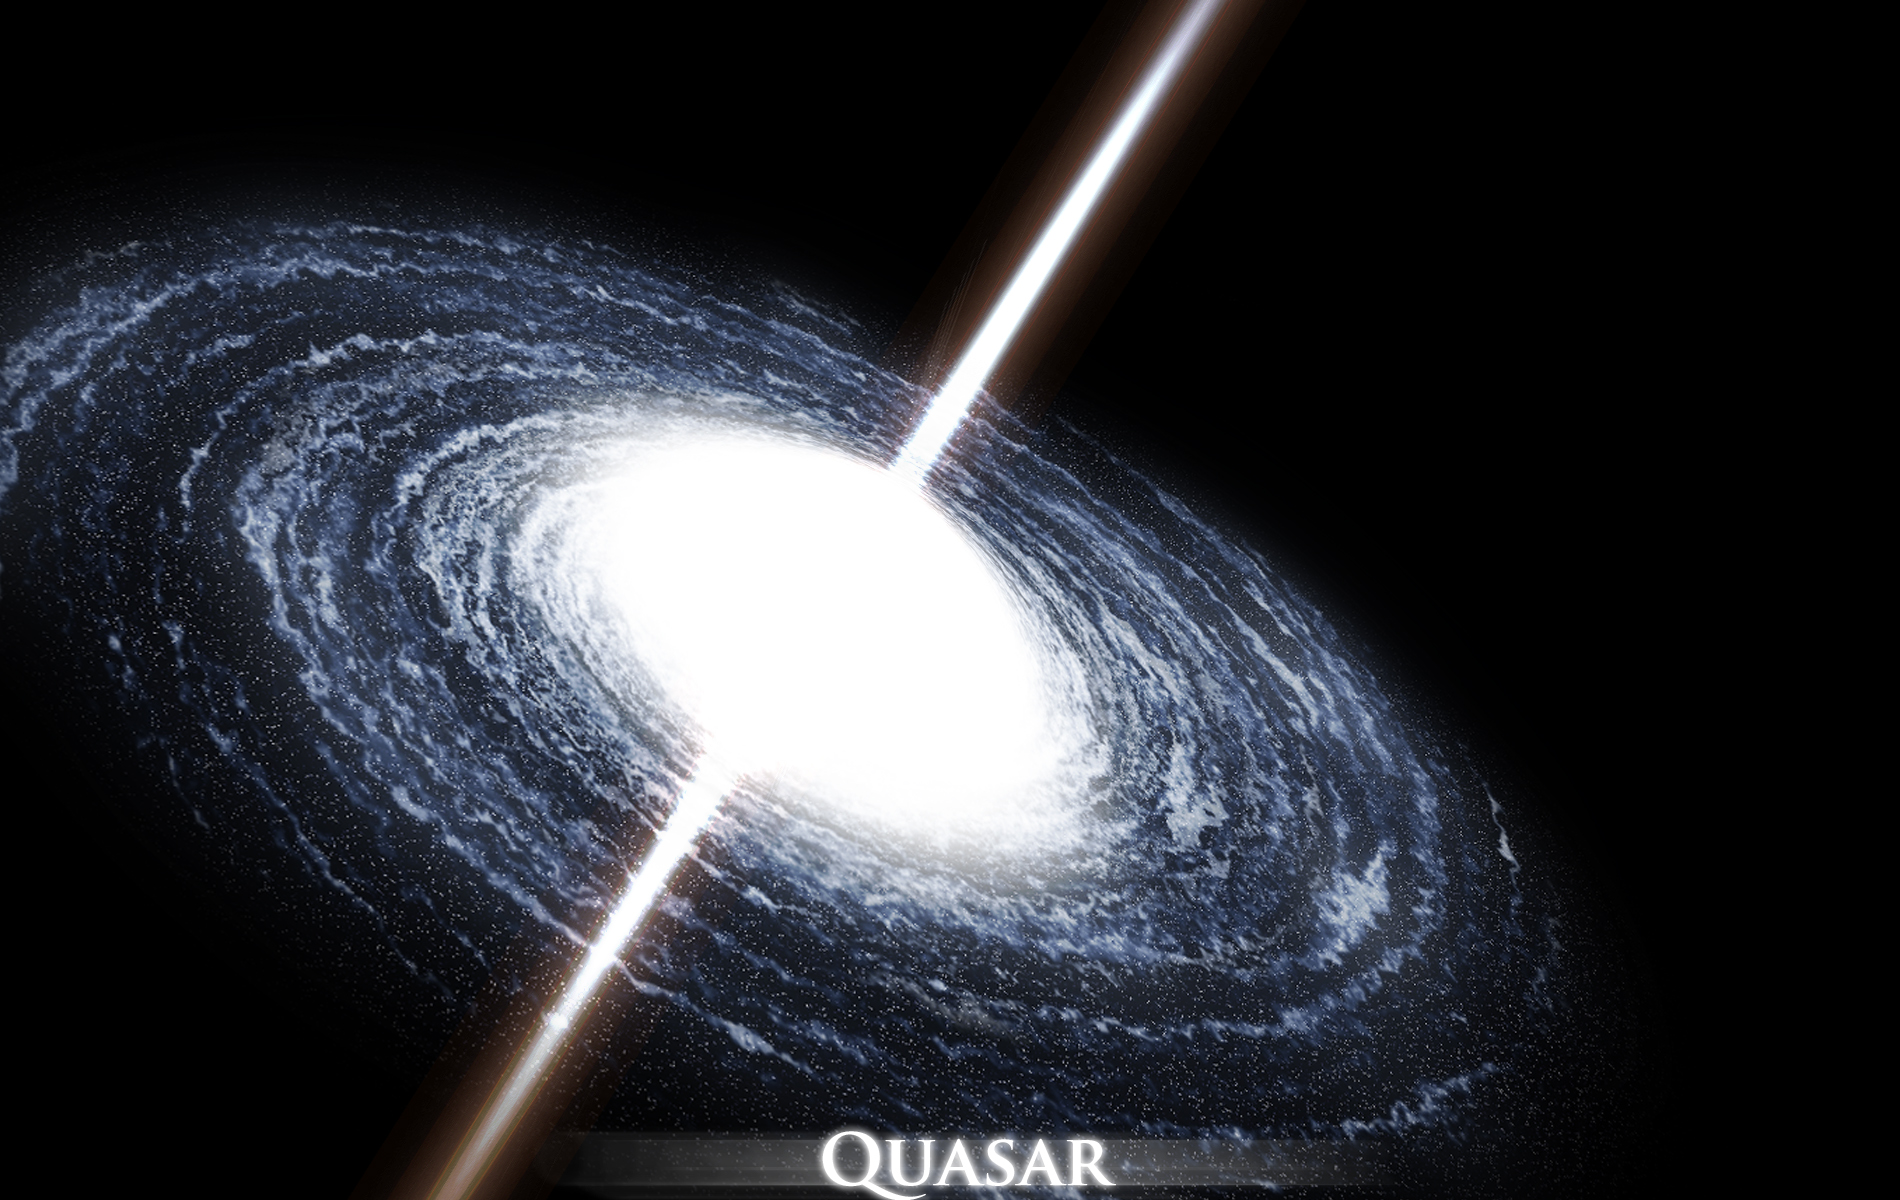 Quasar_by_TranceVlSION.jpg